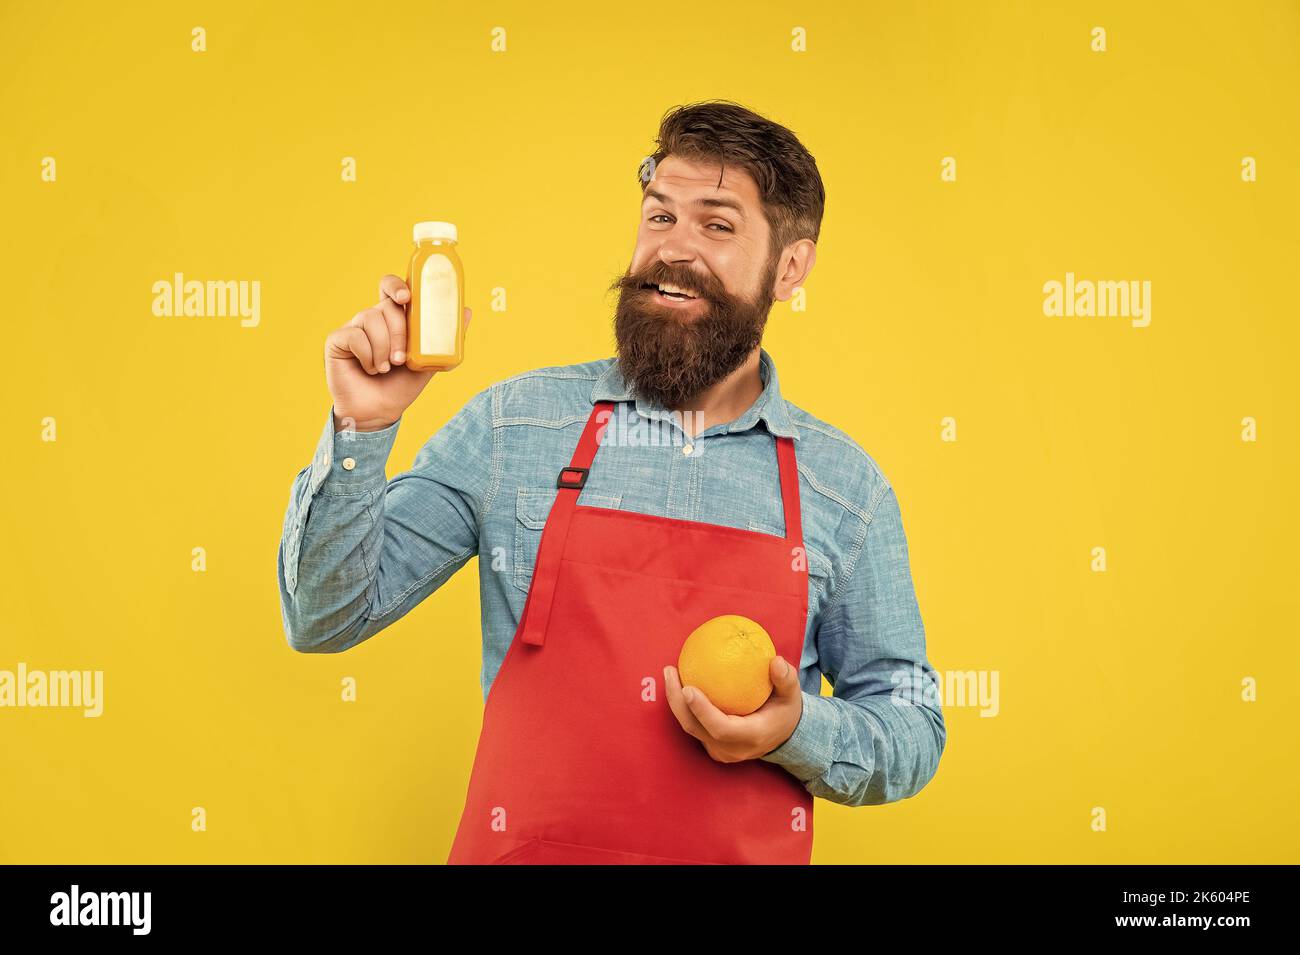 Happy man in apron holding orange and juice bottle yellow background, barkeeper Stock Photo